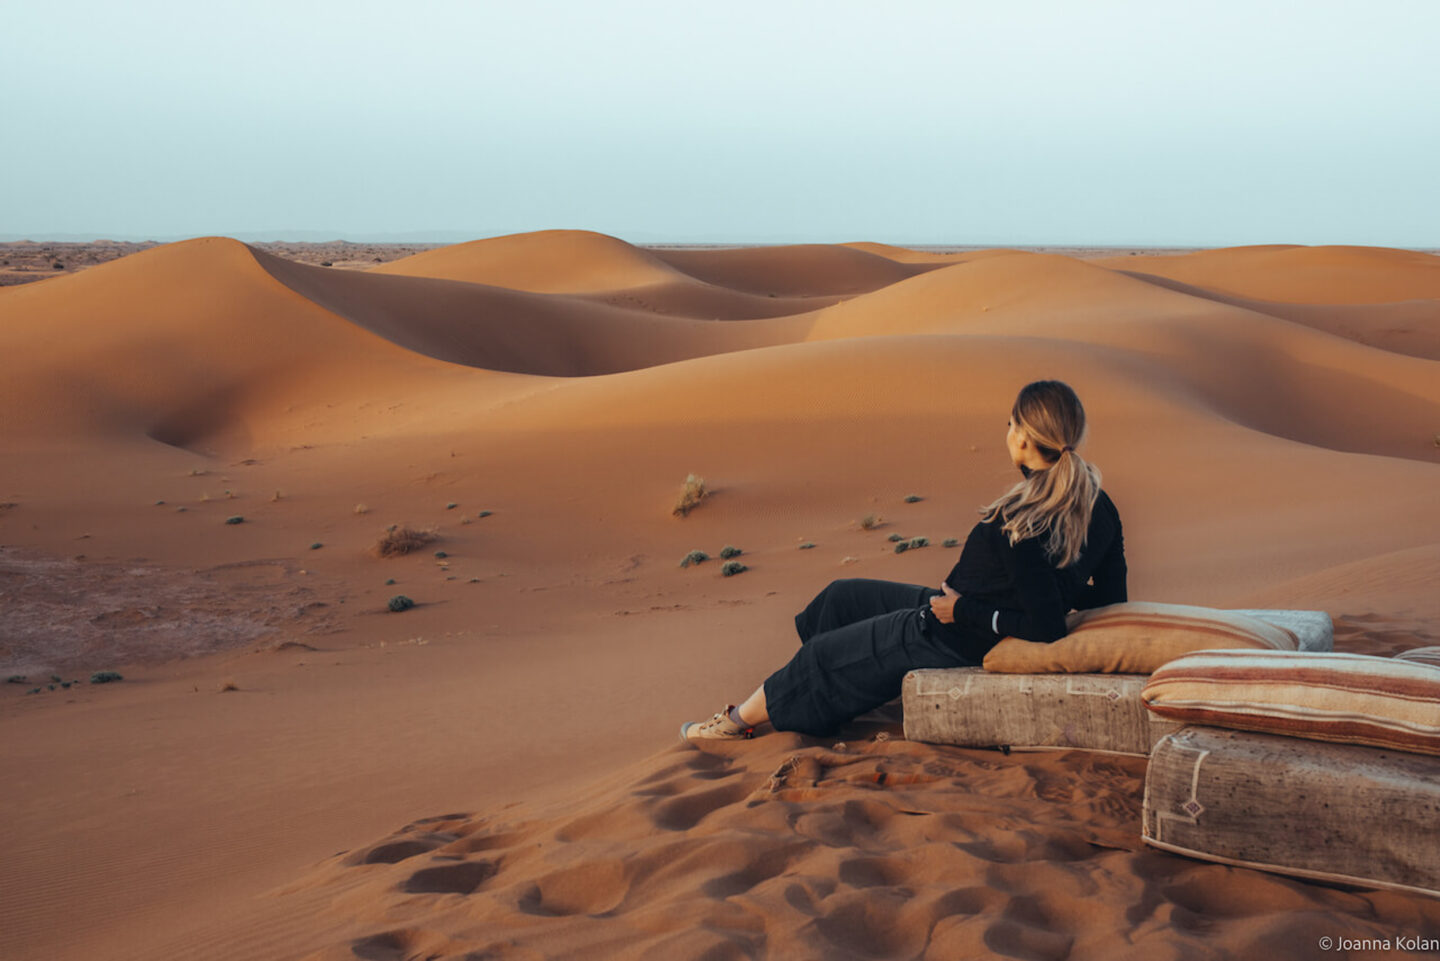 Sahara Desert camp in Morocco